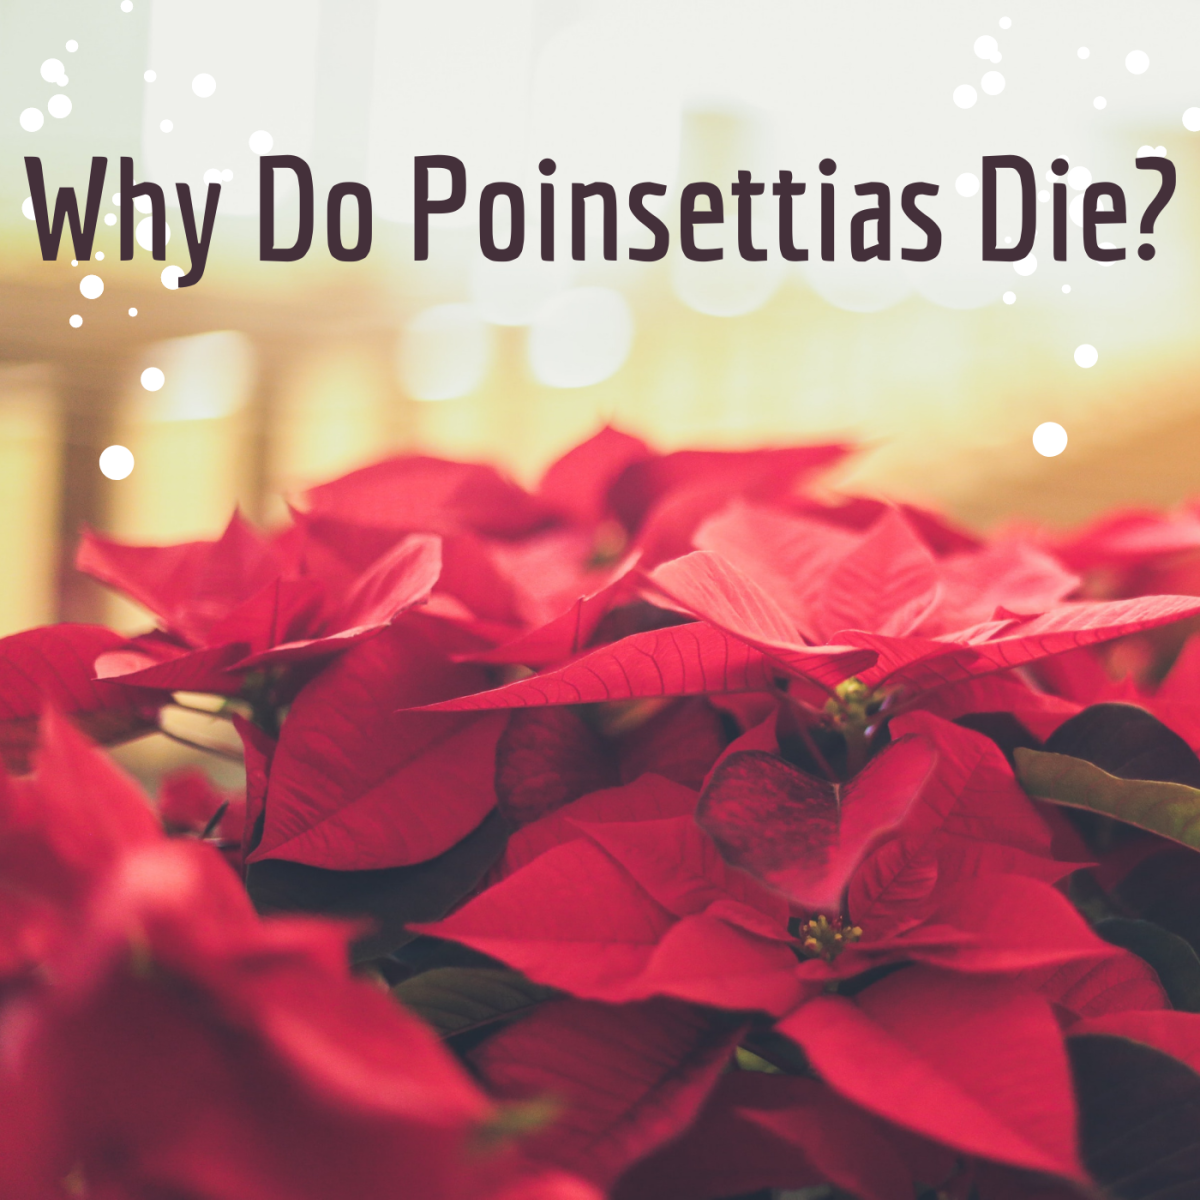 Why do poinsettias die?